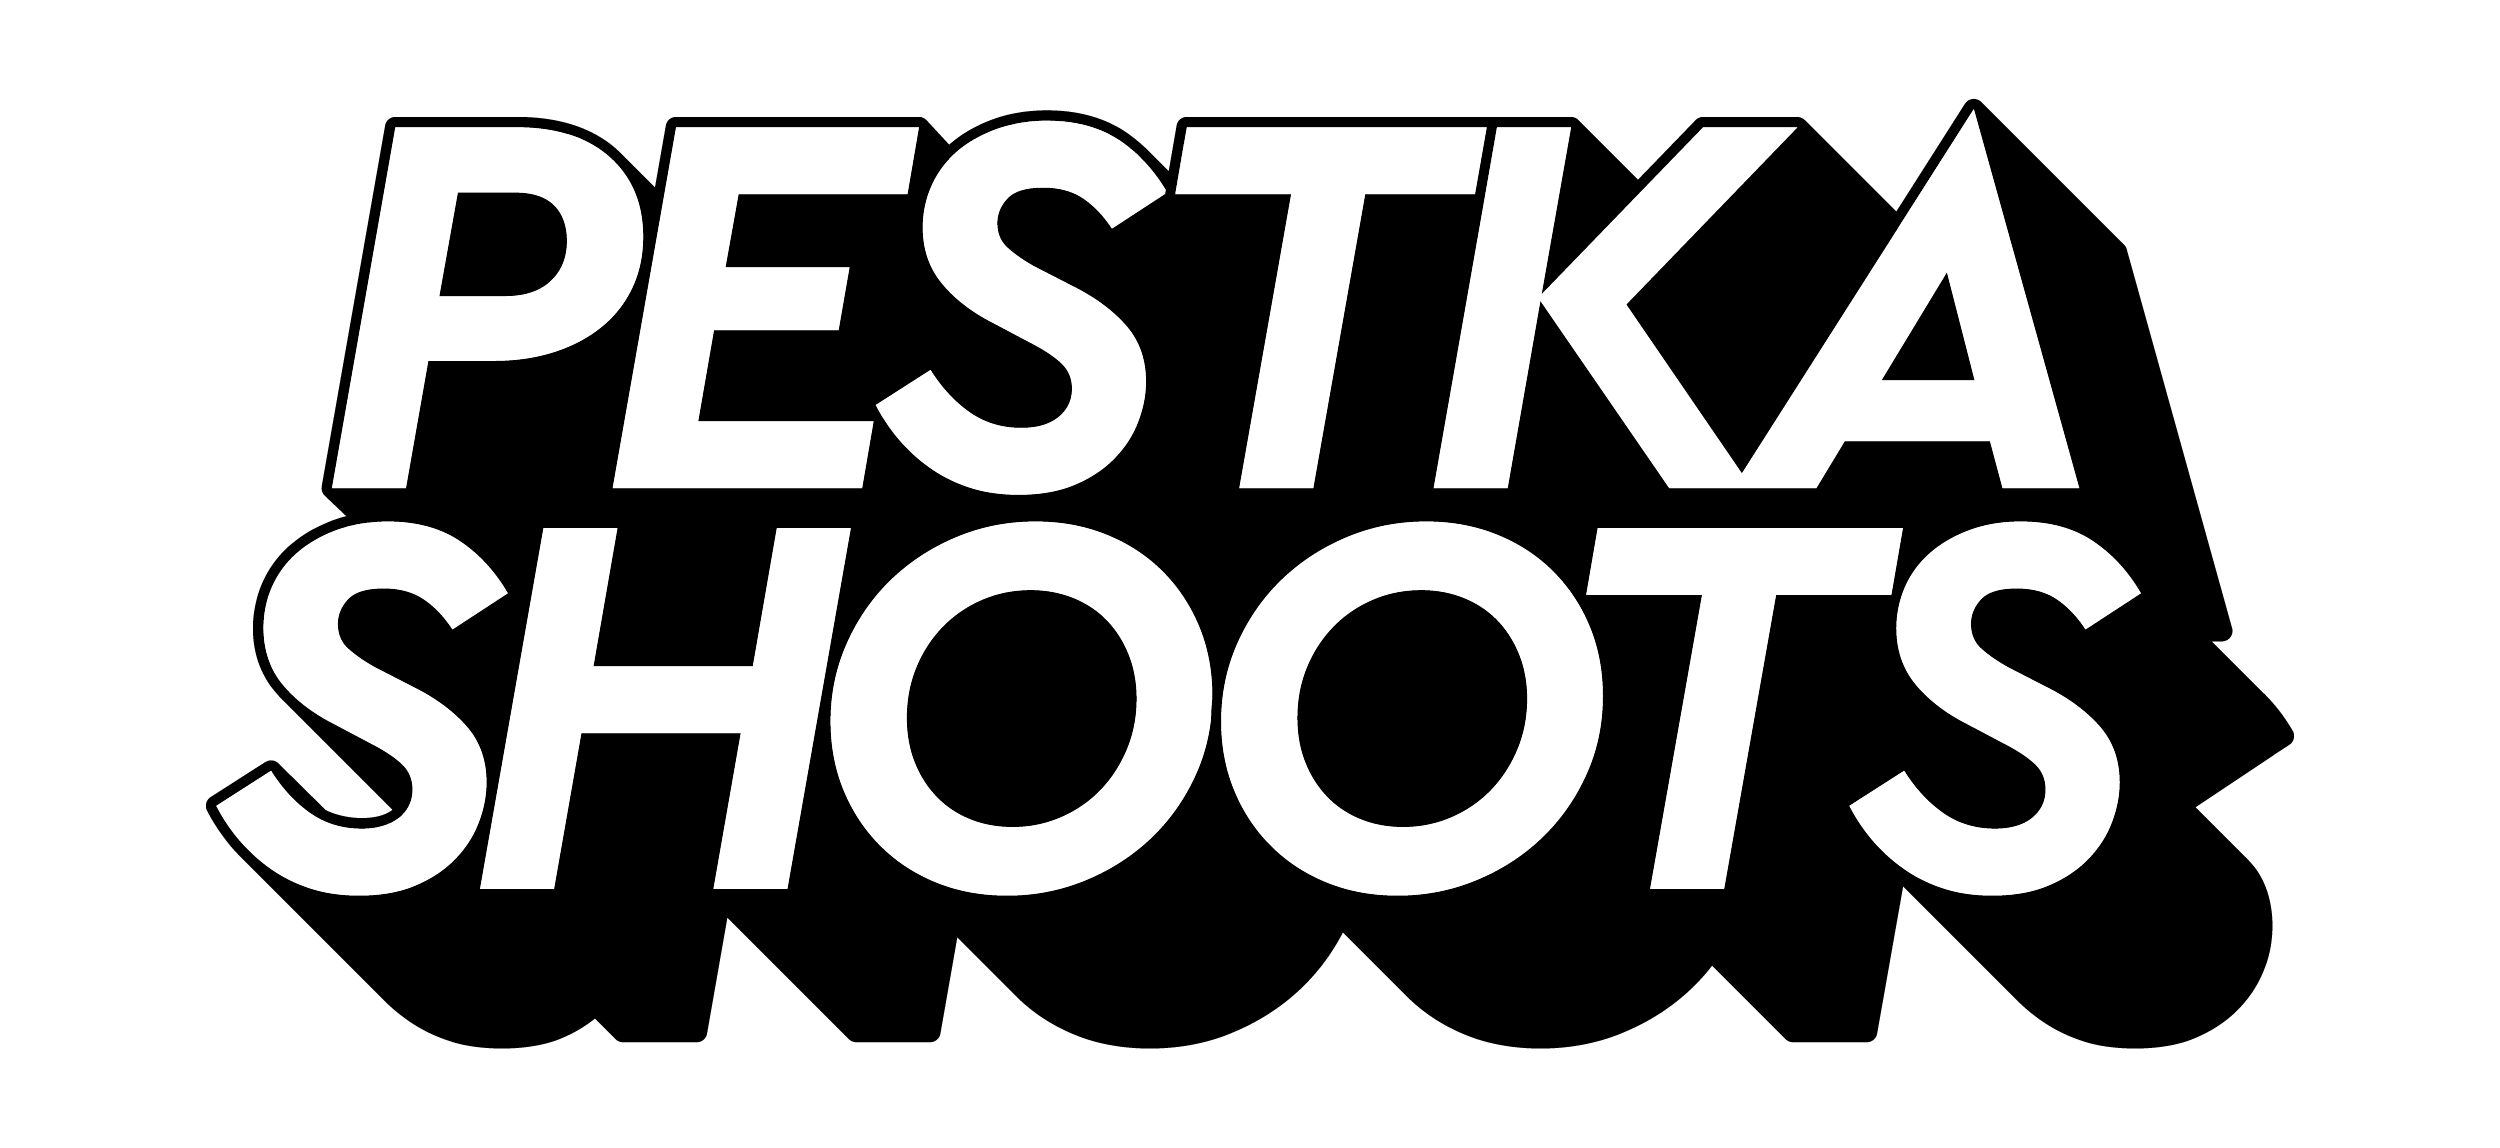 Pestka Shoots